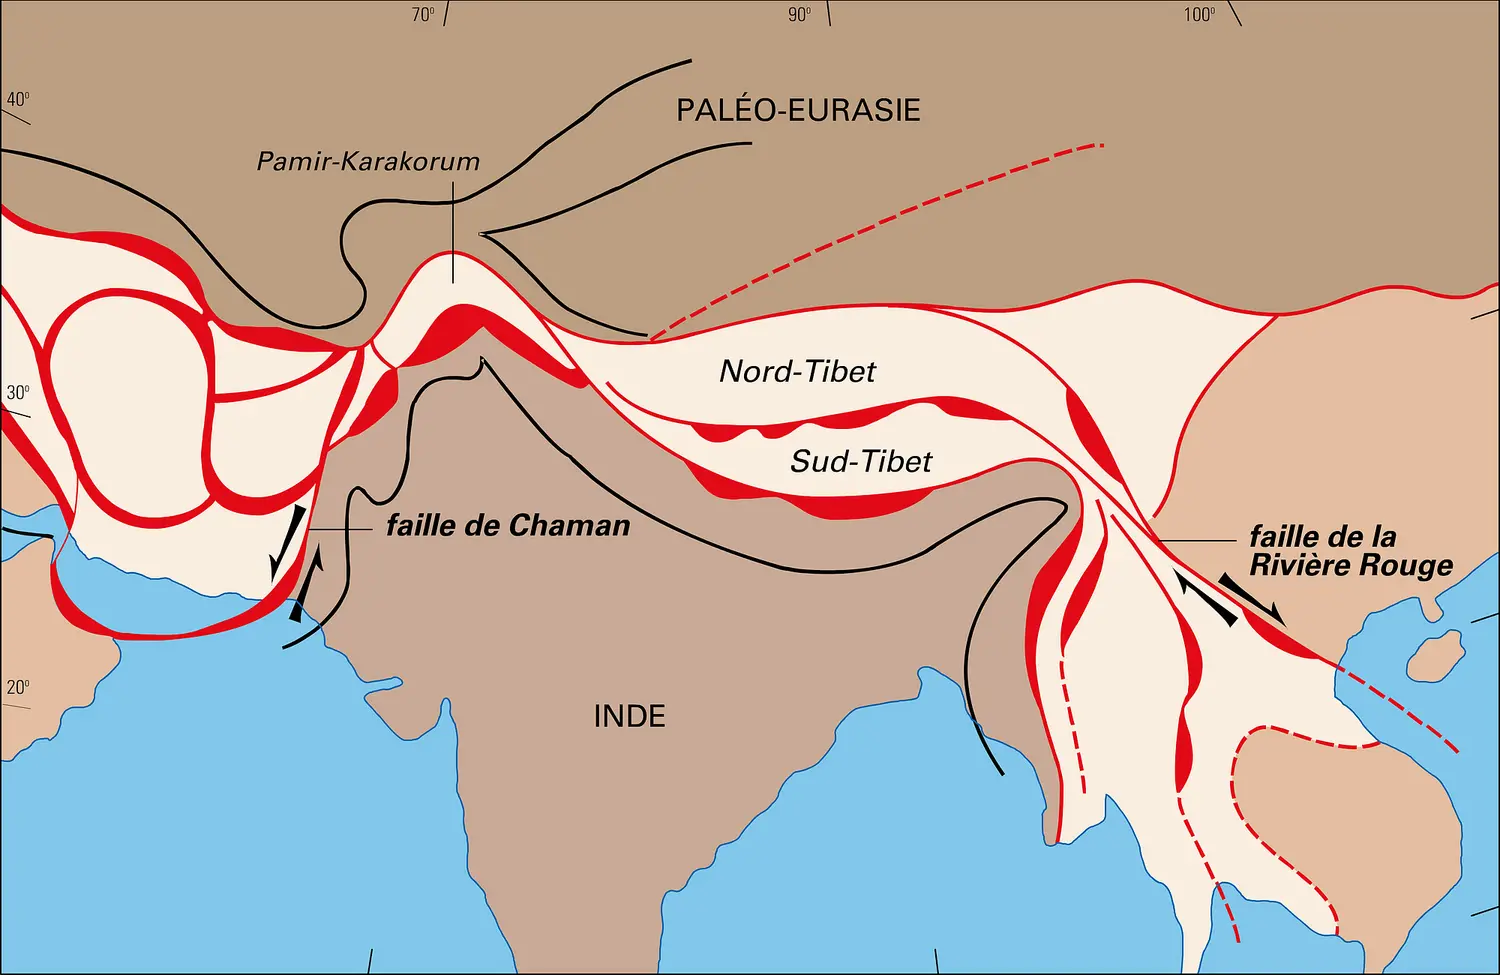 Sutures ophiolitiques entre Paléo-Eurasie et Inde